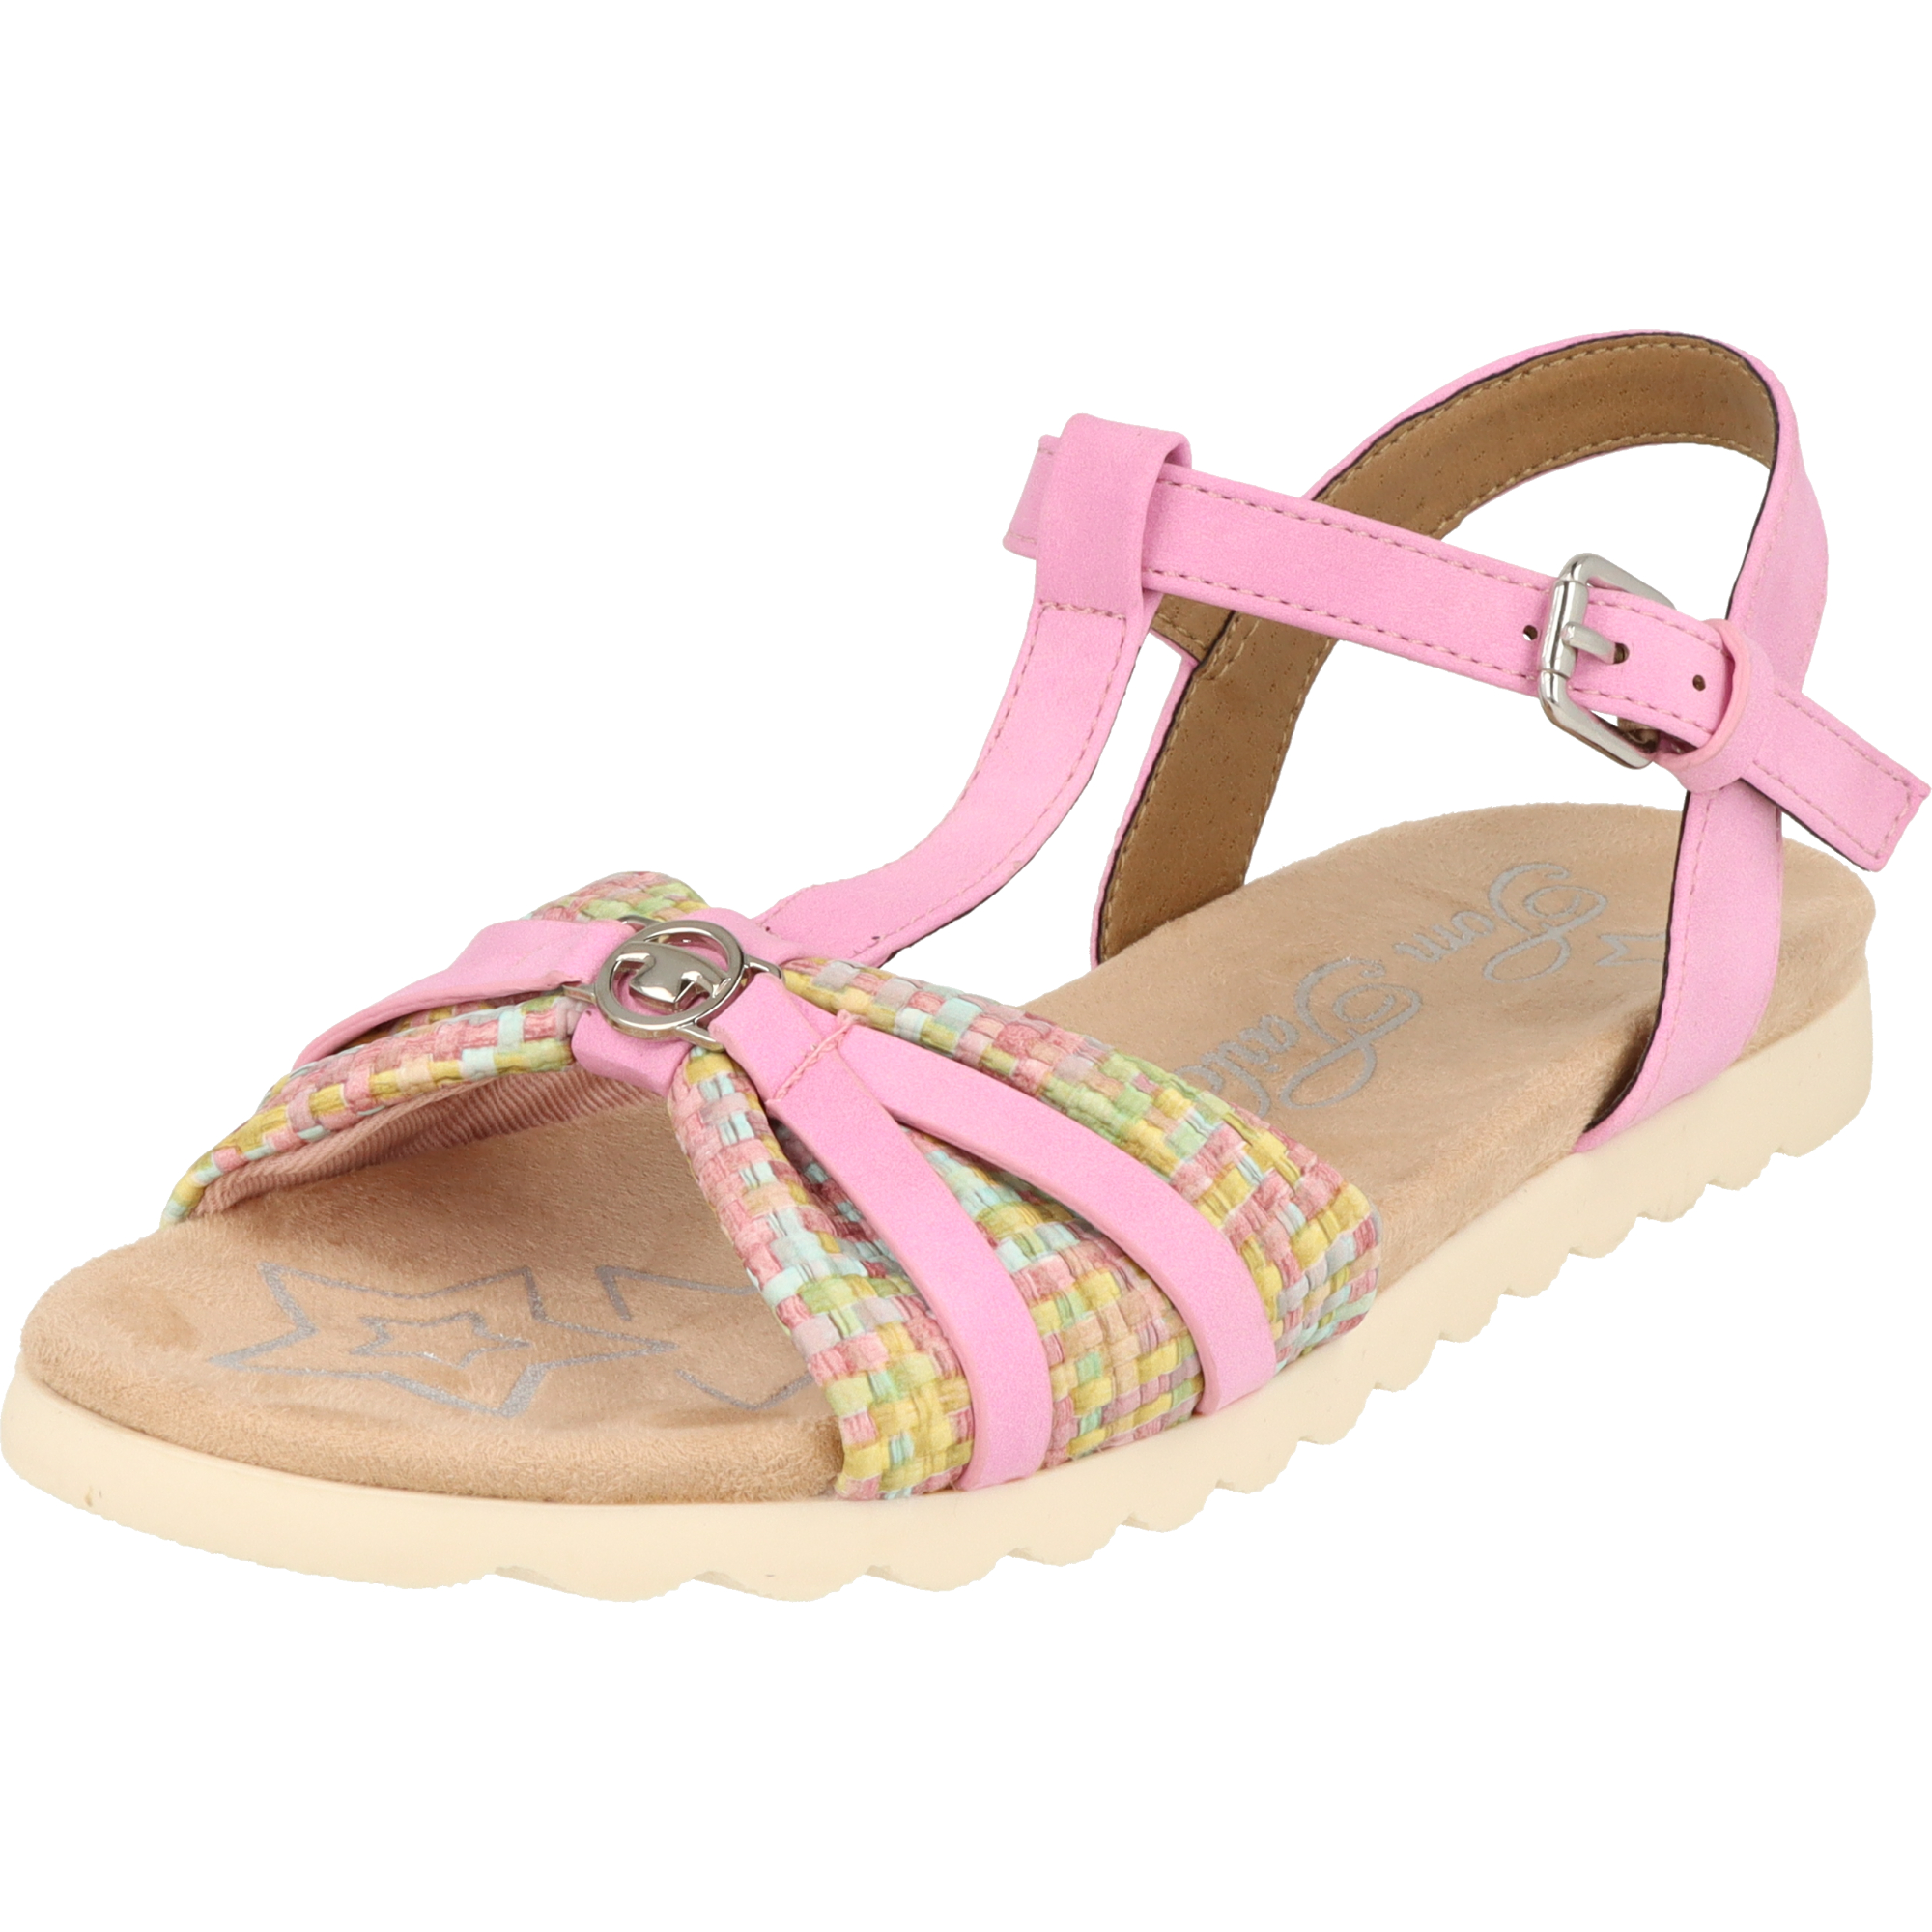 Tom Tailor Kinder Mädchen Schuhe 5370100017 Sommer Freizeit Sandalette Rosa